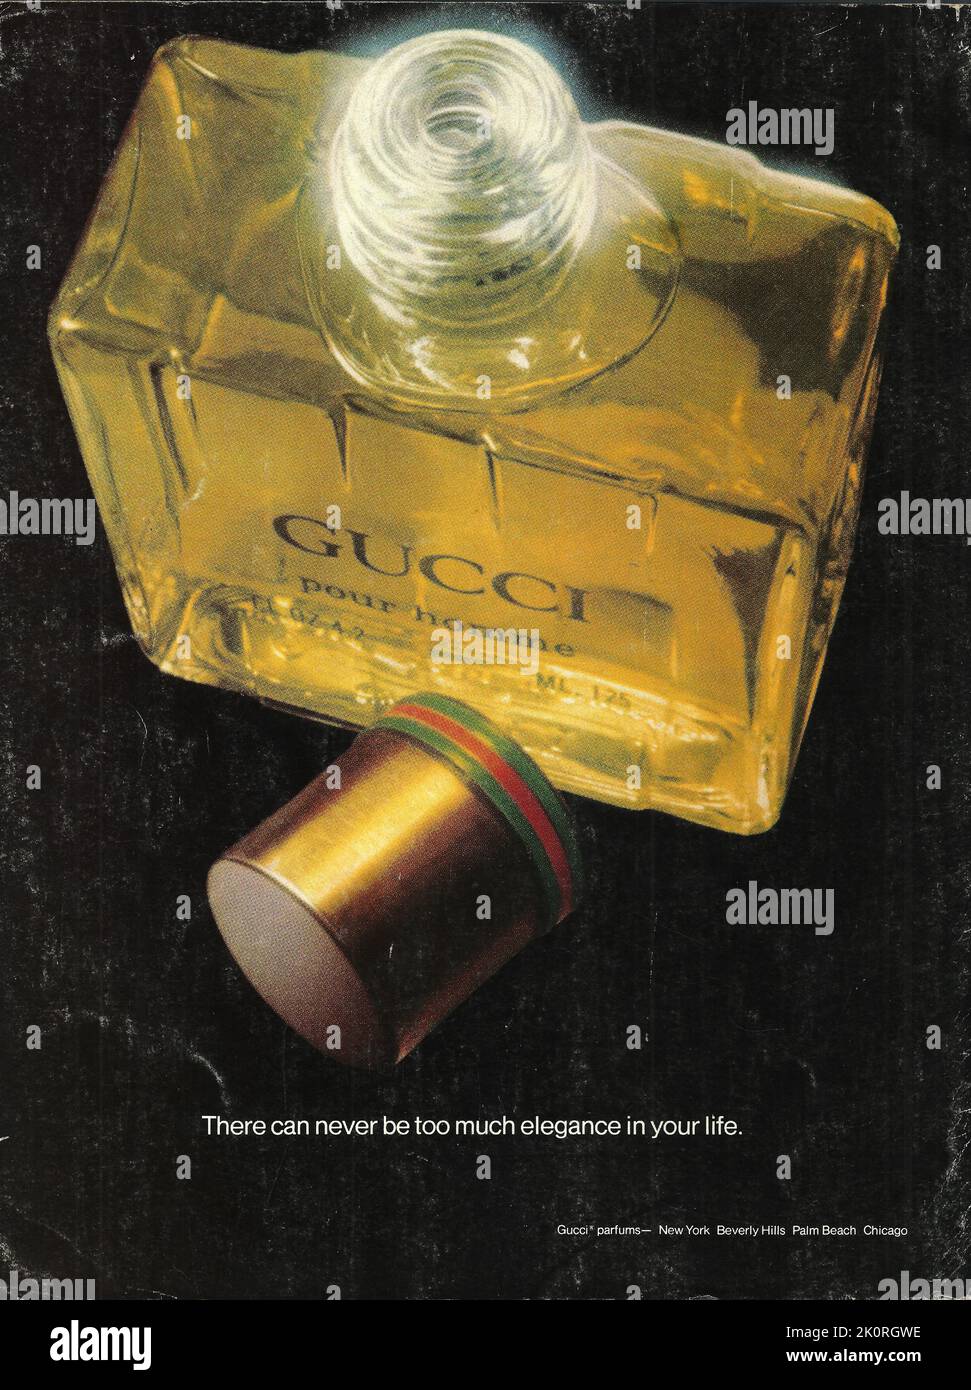 Gucci perfume for men Gucci pour homme parfums vintage advertisement advert ad 1980s 1970s Stock Photo